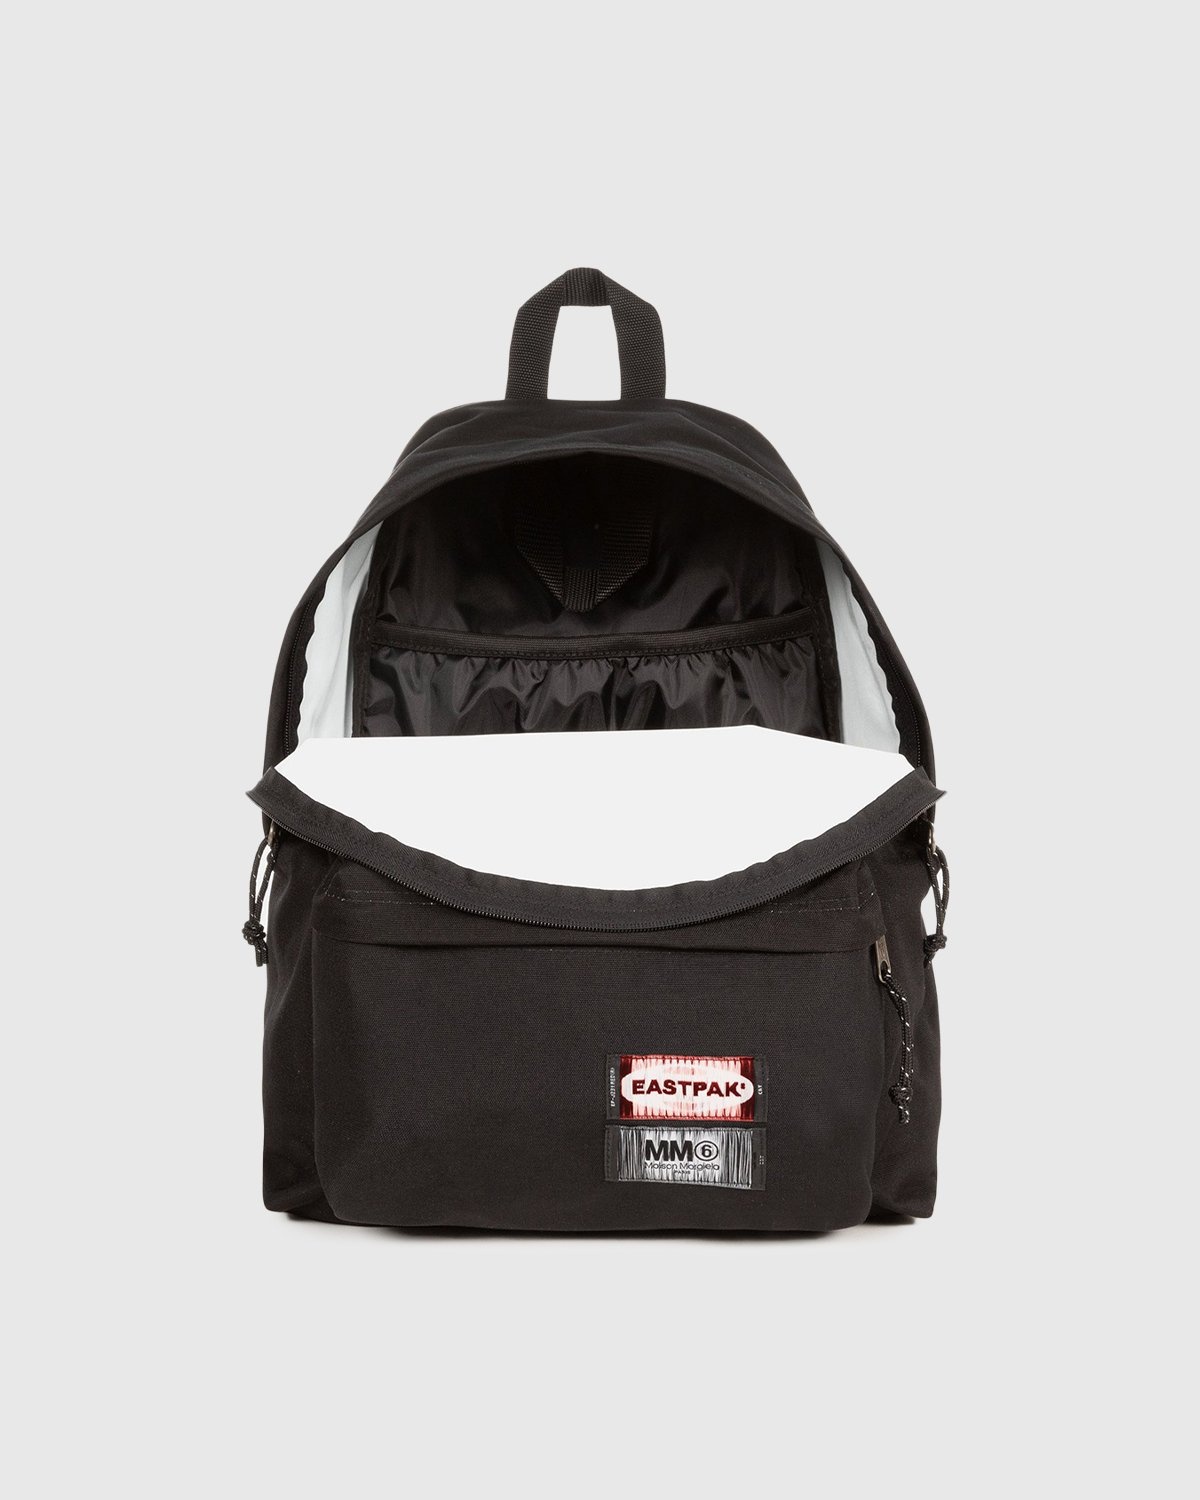 MM6 Maison Margiela x Eastpak – Padded Backpack Black - Backpacks - Black - Image 3